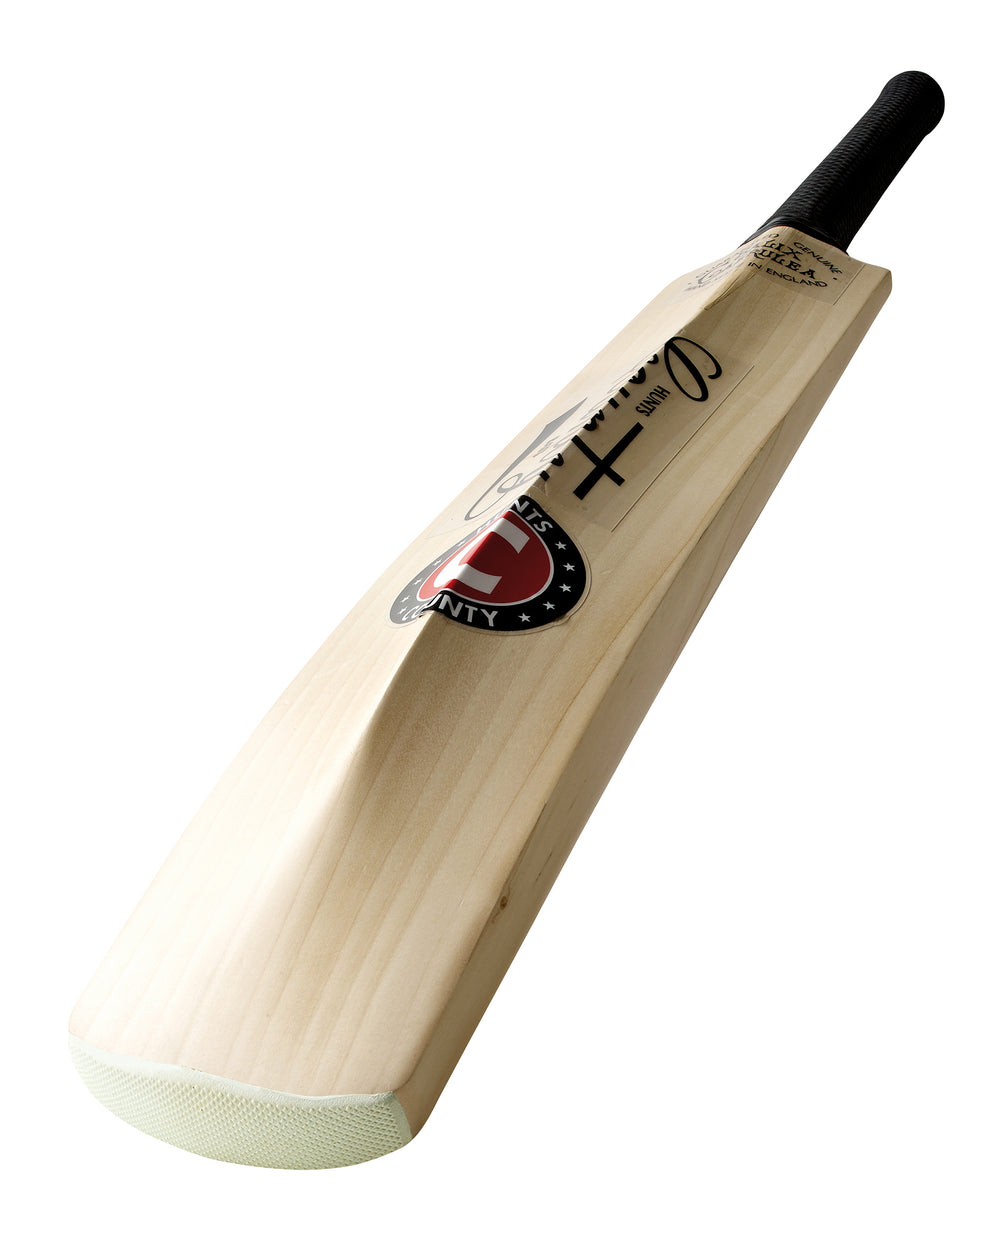 Hunts County Caerulex Select Cricket Bat